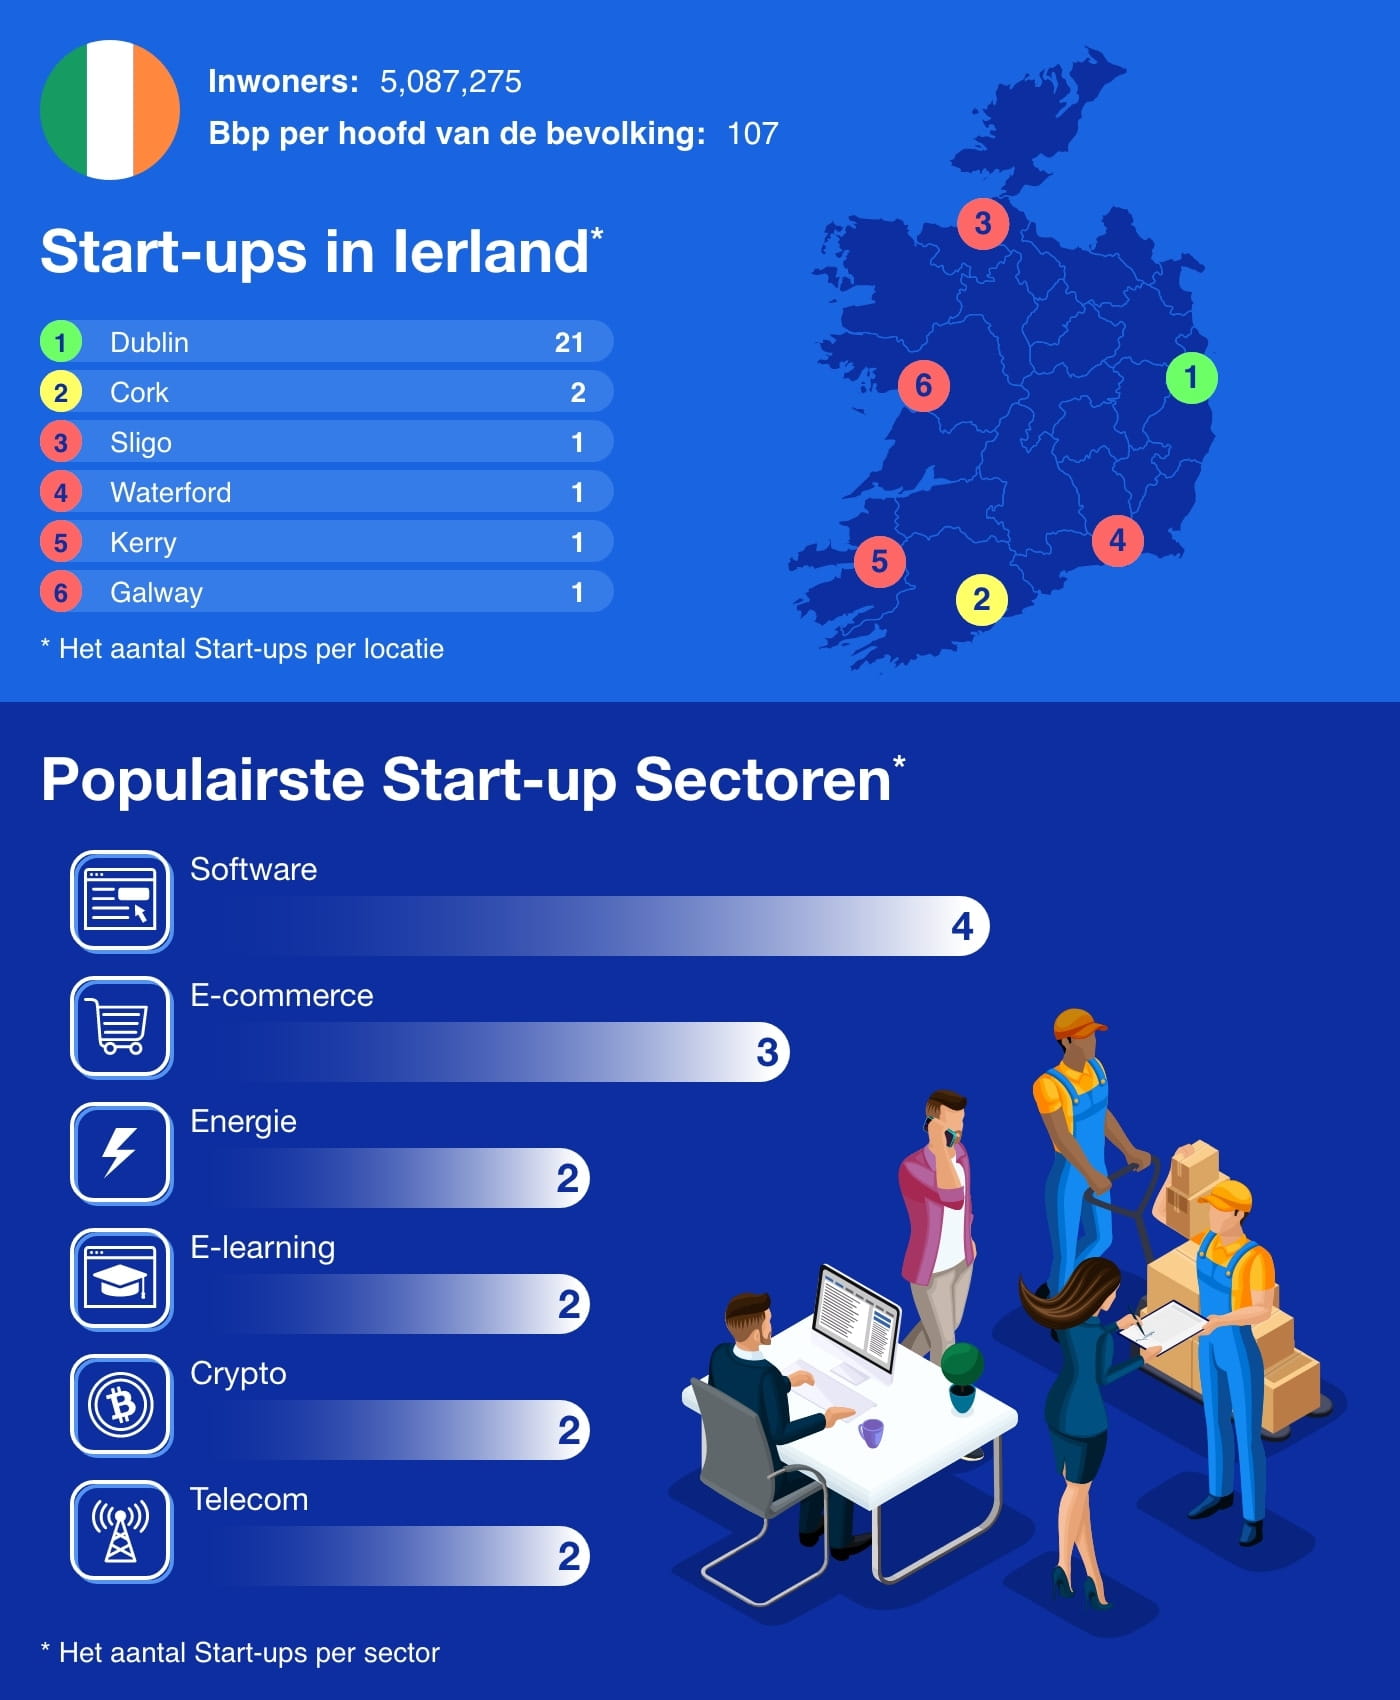 Ireland - European Startup Hubs